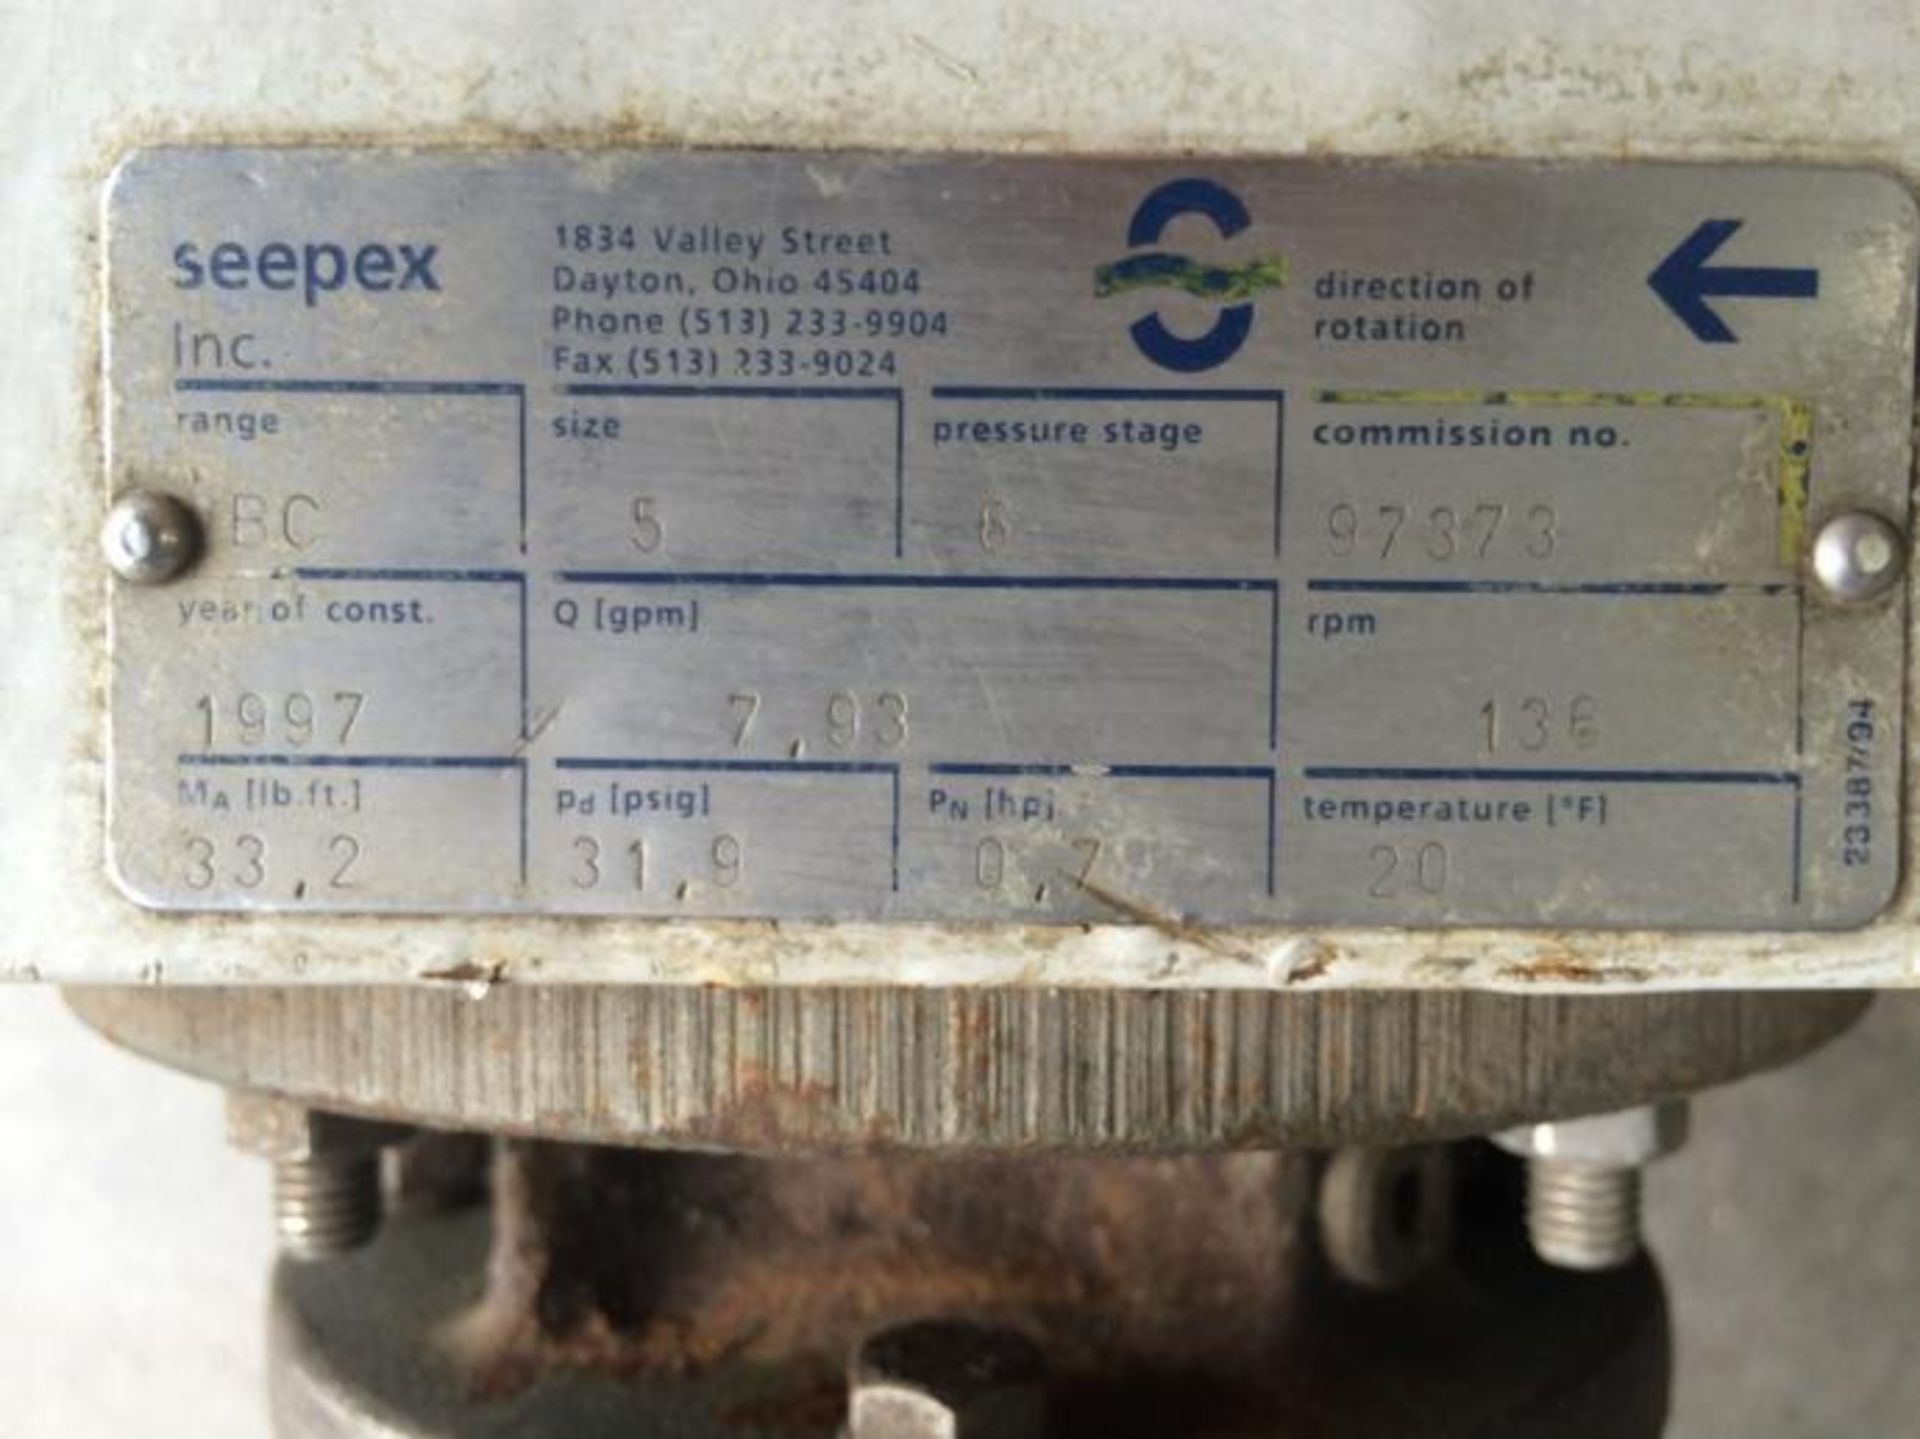 Pompe seepex - Pump seepex - Bild 3 aus 4